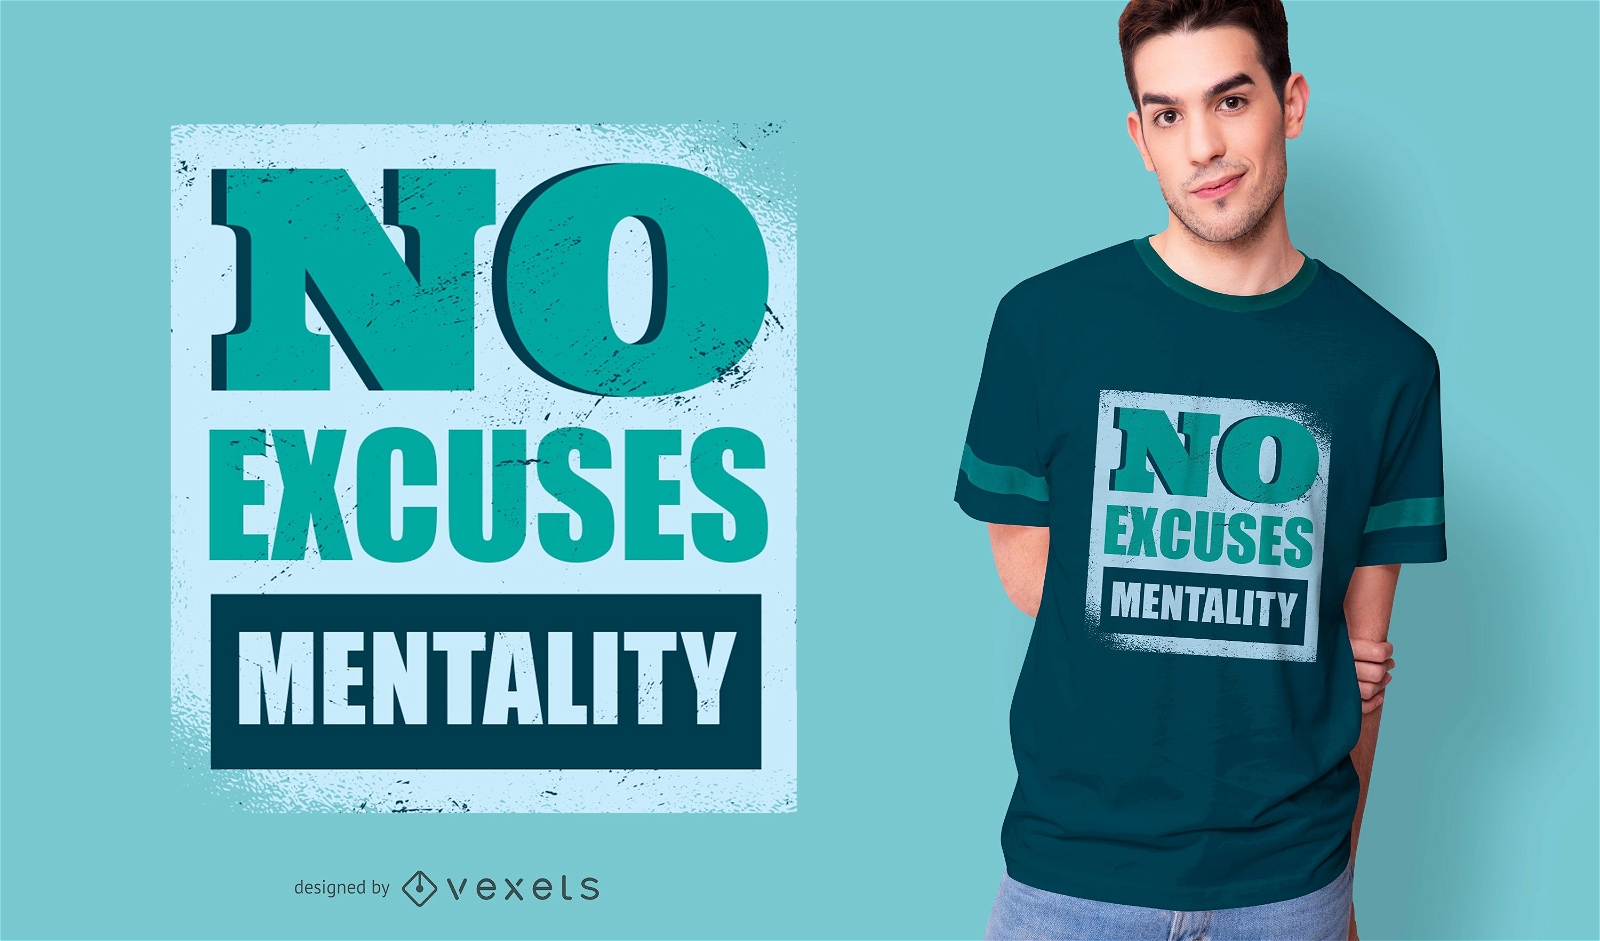 No excuses mentality t-shirt design